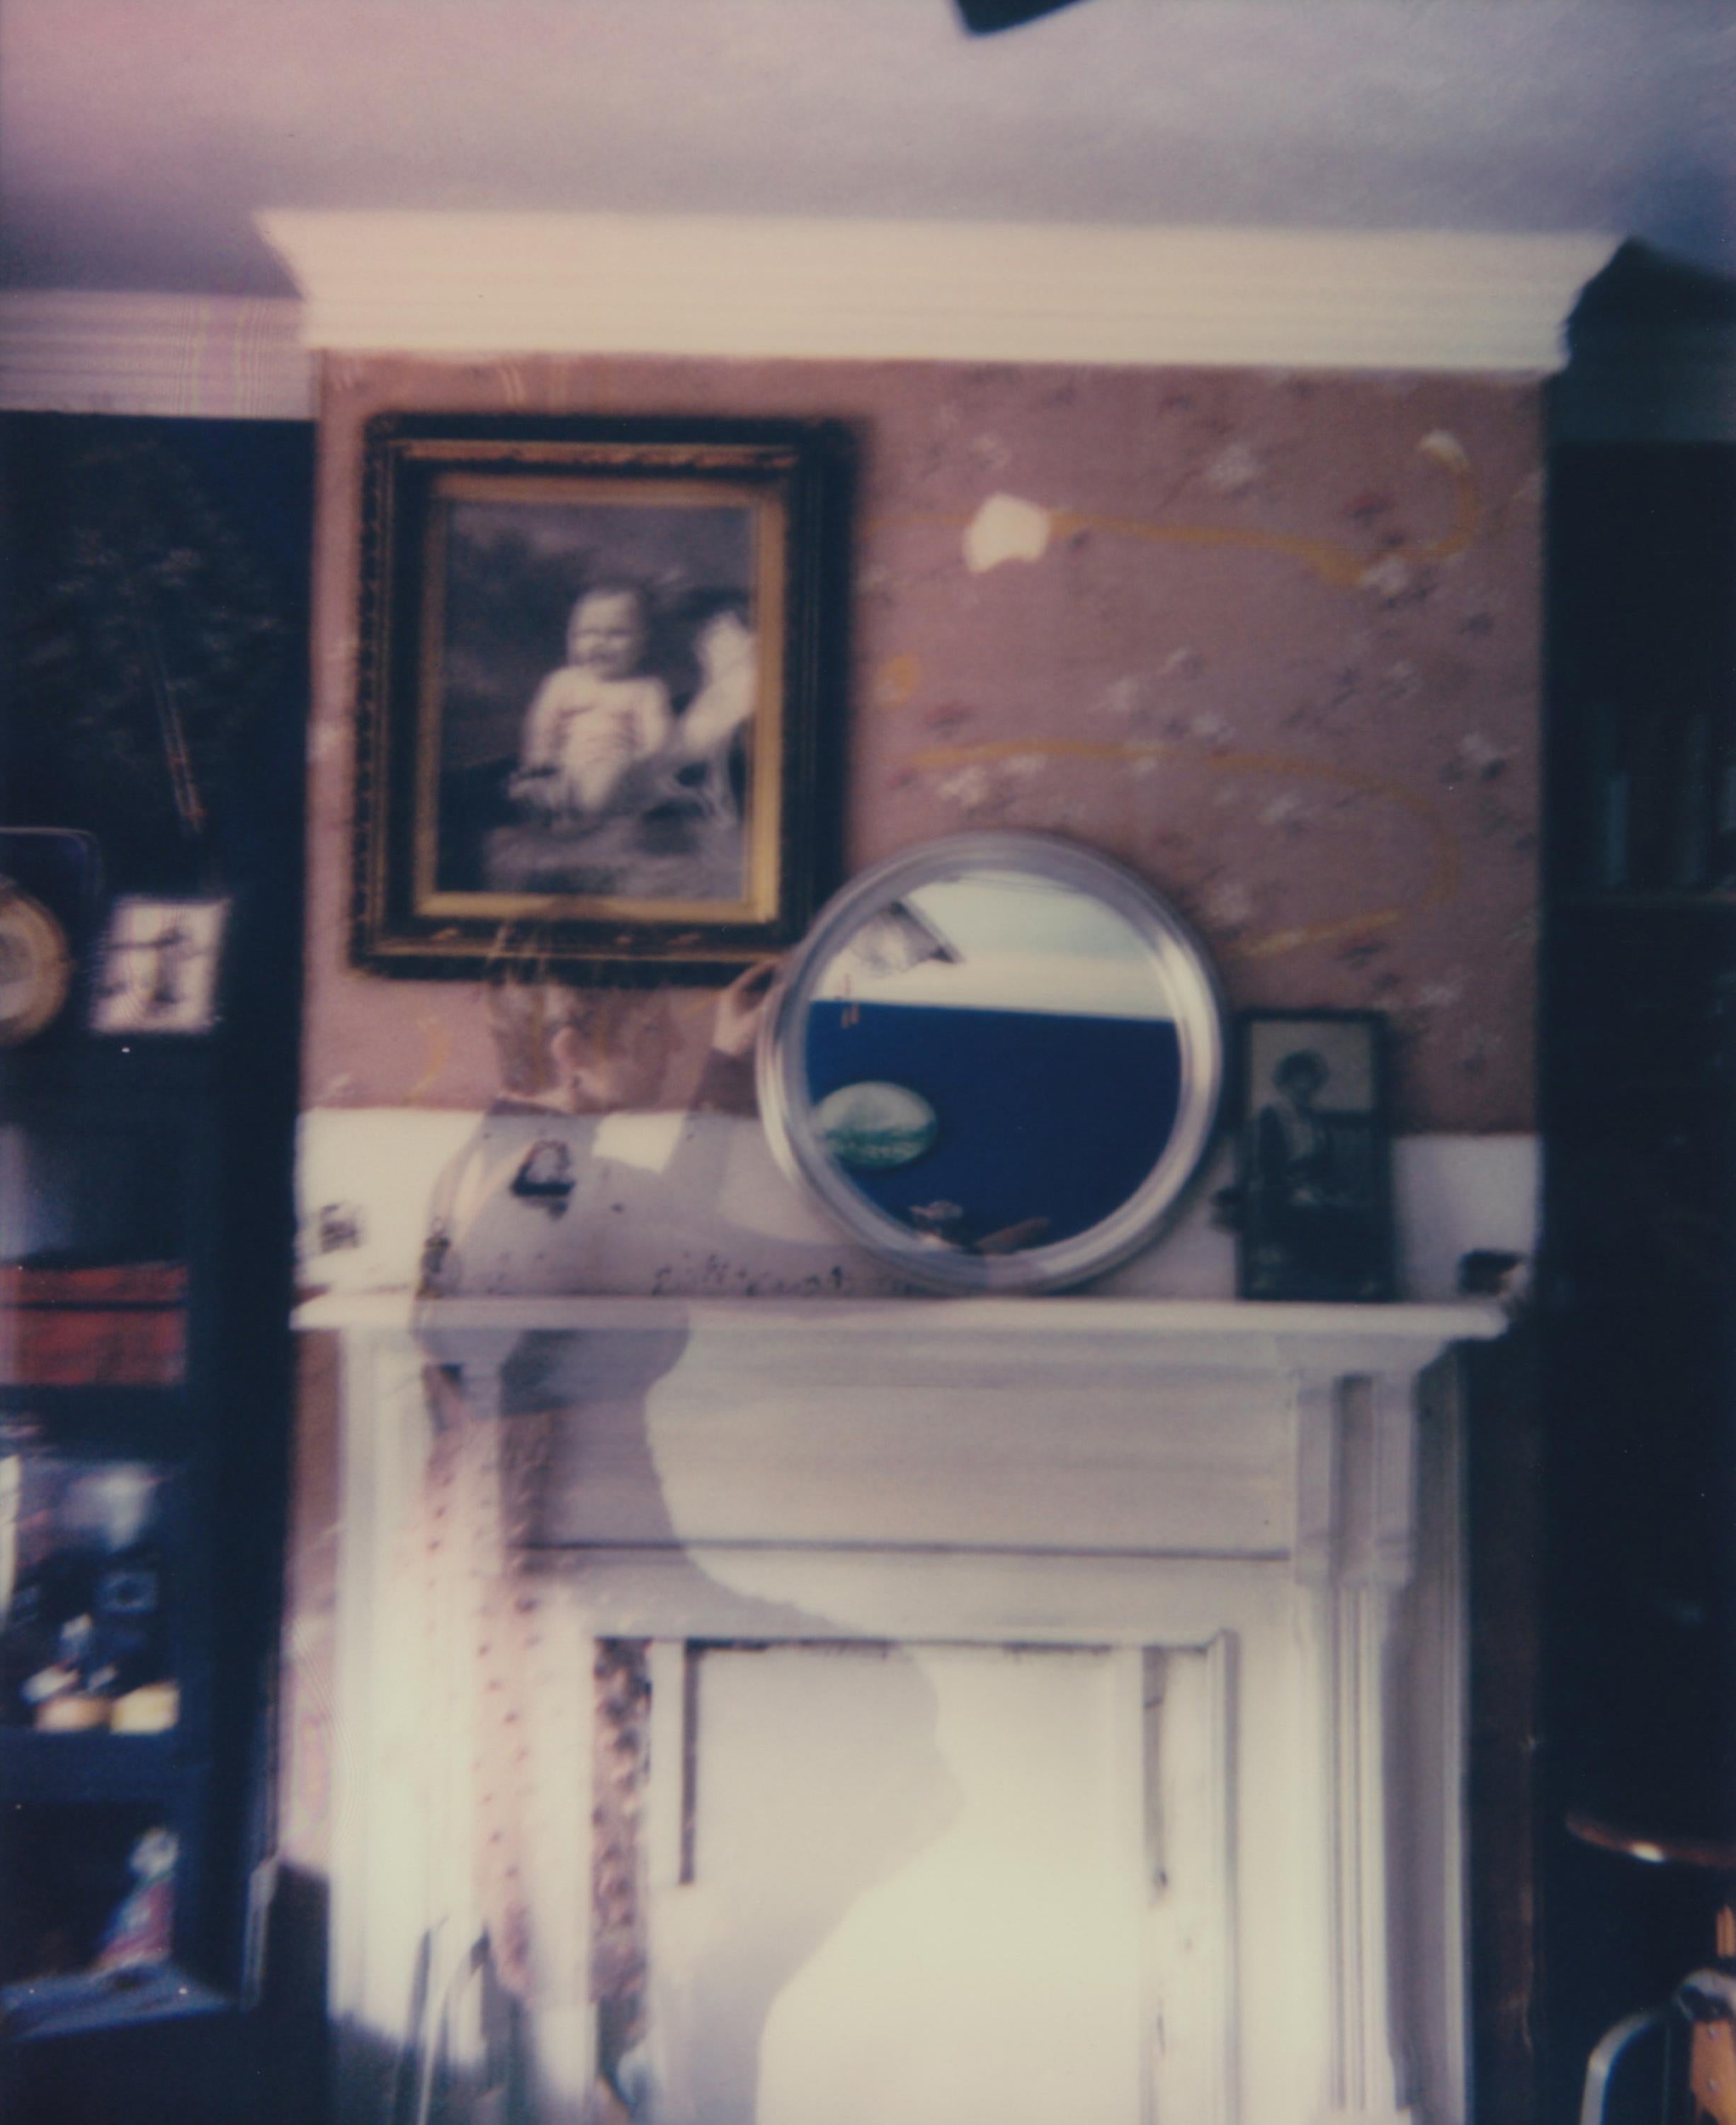 Self-Portrait with Mirror - Contemporary, Woman, Polaroid, Interior